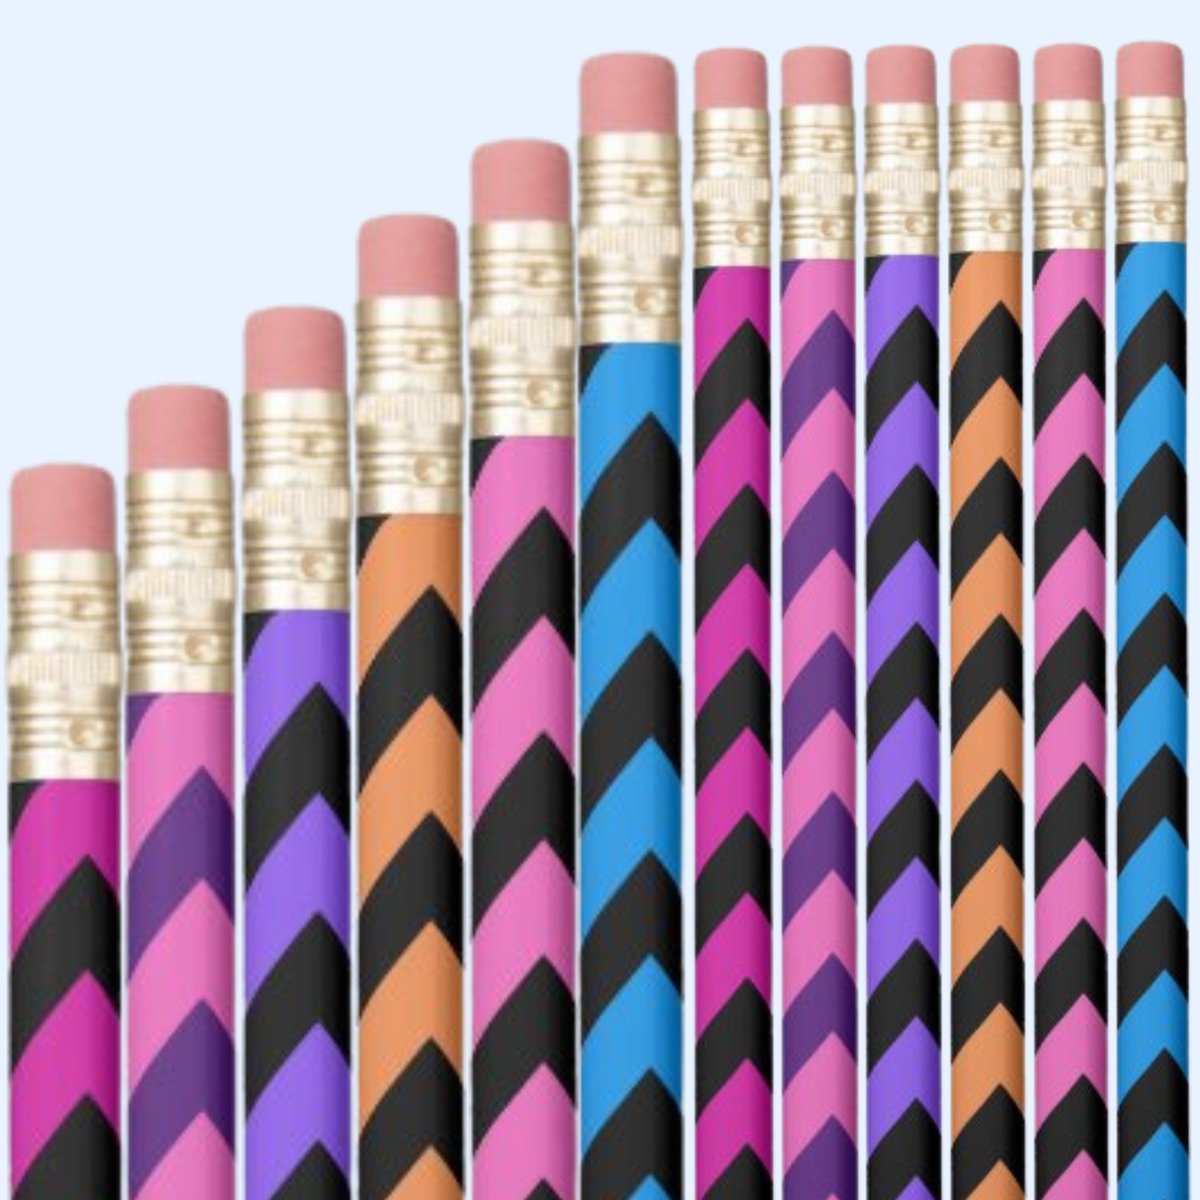 Colorful Abstract Pattern Pencil zazzle.com/z/a3u6trnf?rf=… via @zazzle #pencilsketch #pencilart #pencil #pattern #school #SchoolSpirit #stationery #student #teacher #kids